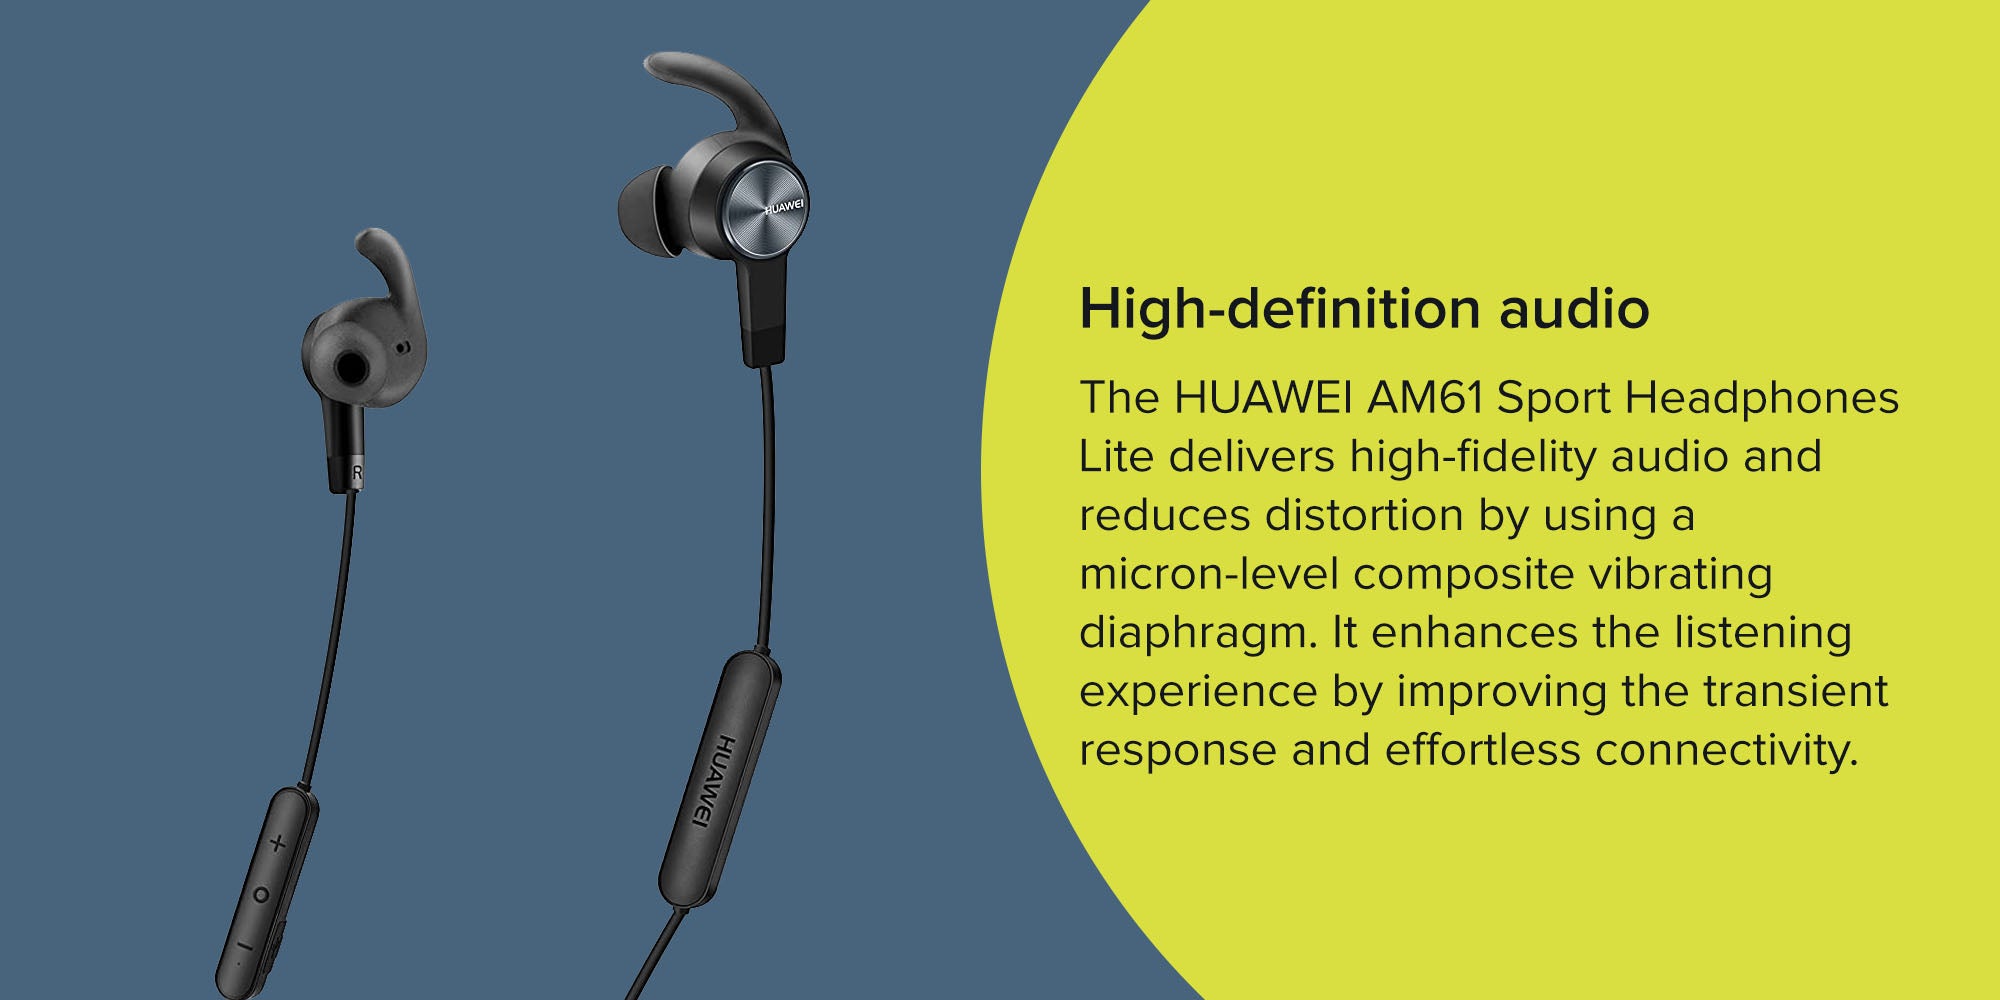 Wireless In-Ear Headphones With Mic Black